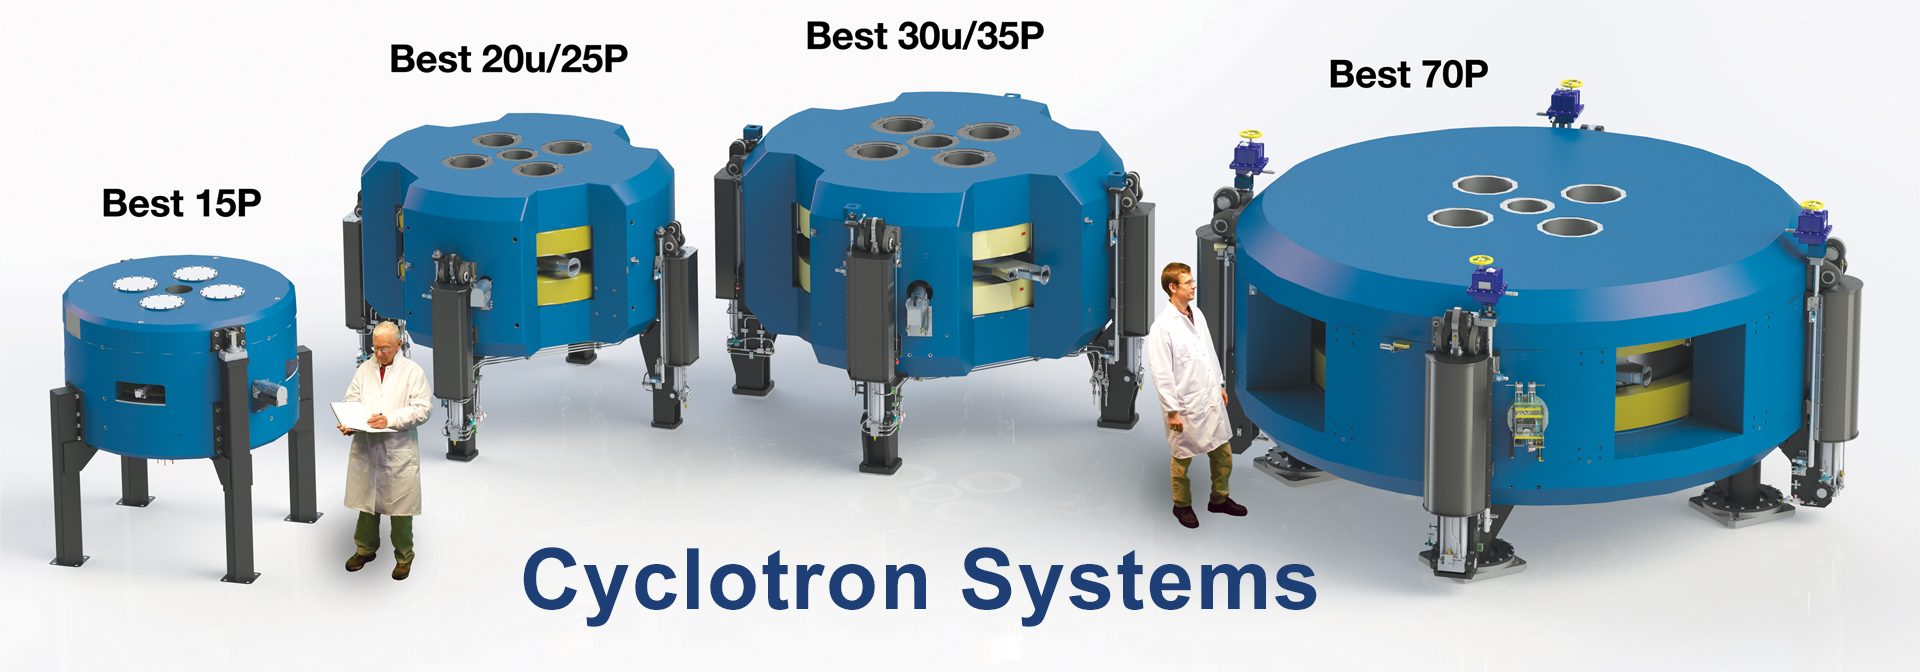 Cyclotron Systems (15p, 25p, 35p & 70p)